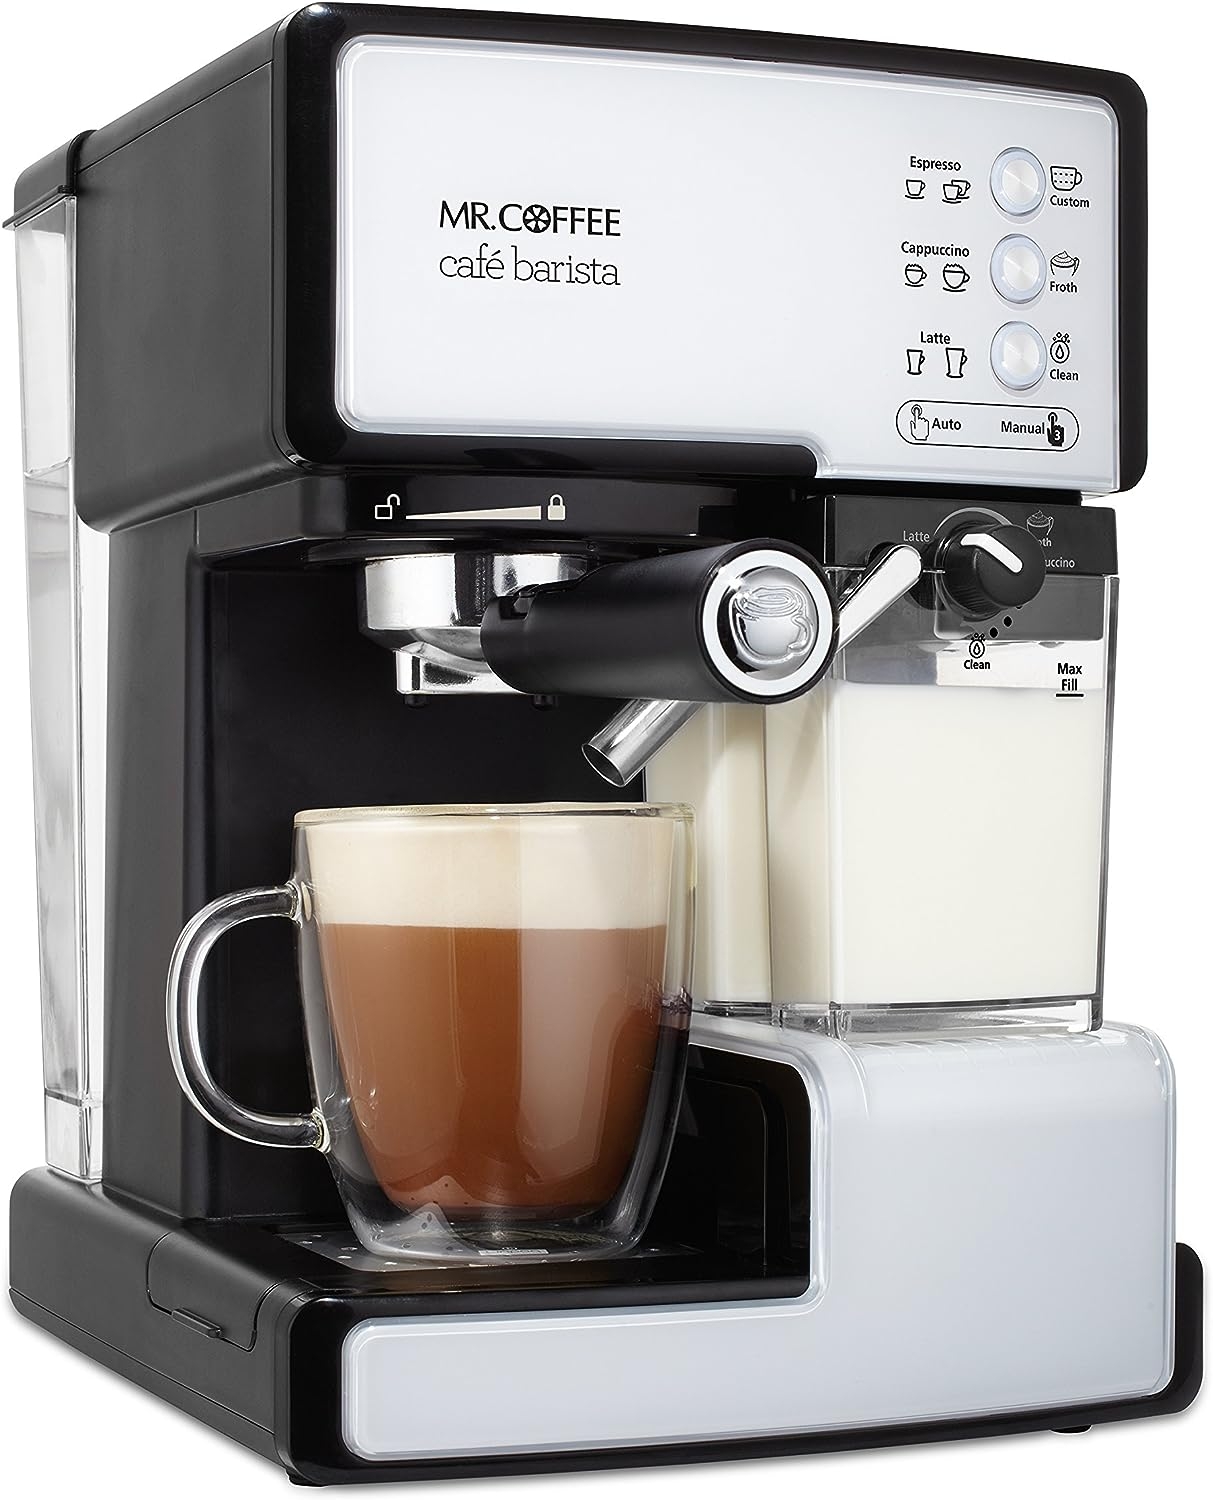 Mr Coffee Espresso Machine - Espresso Machines